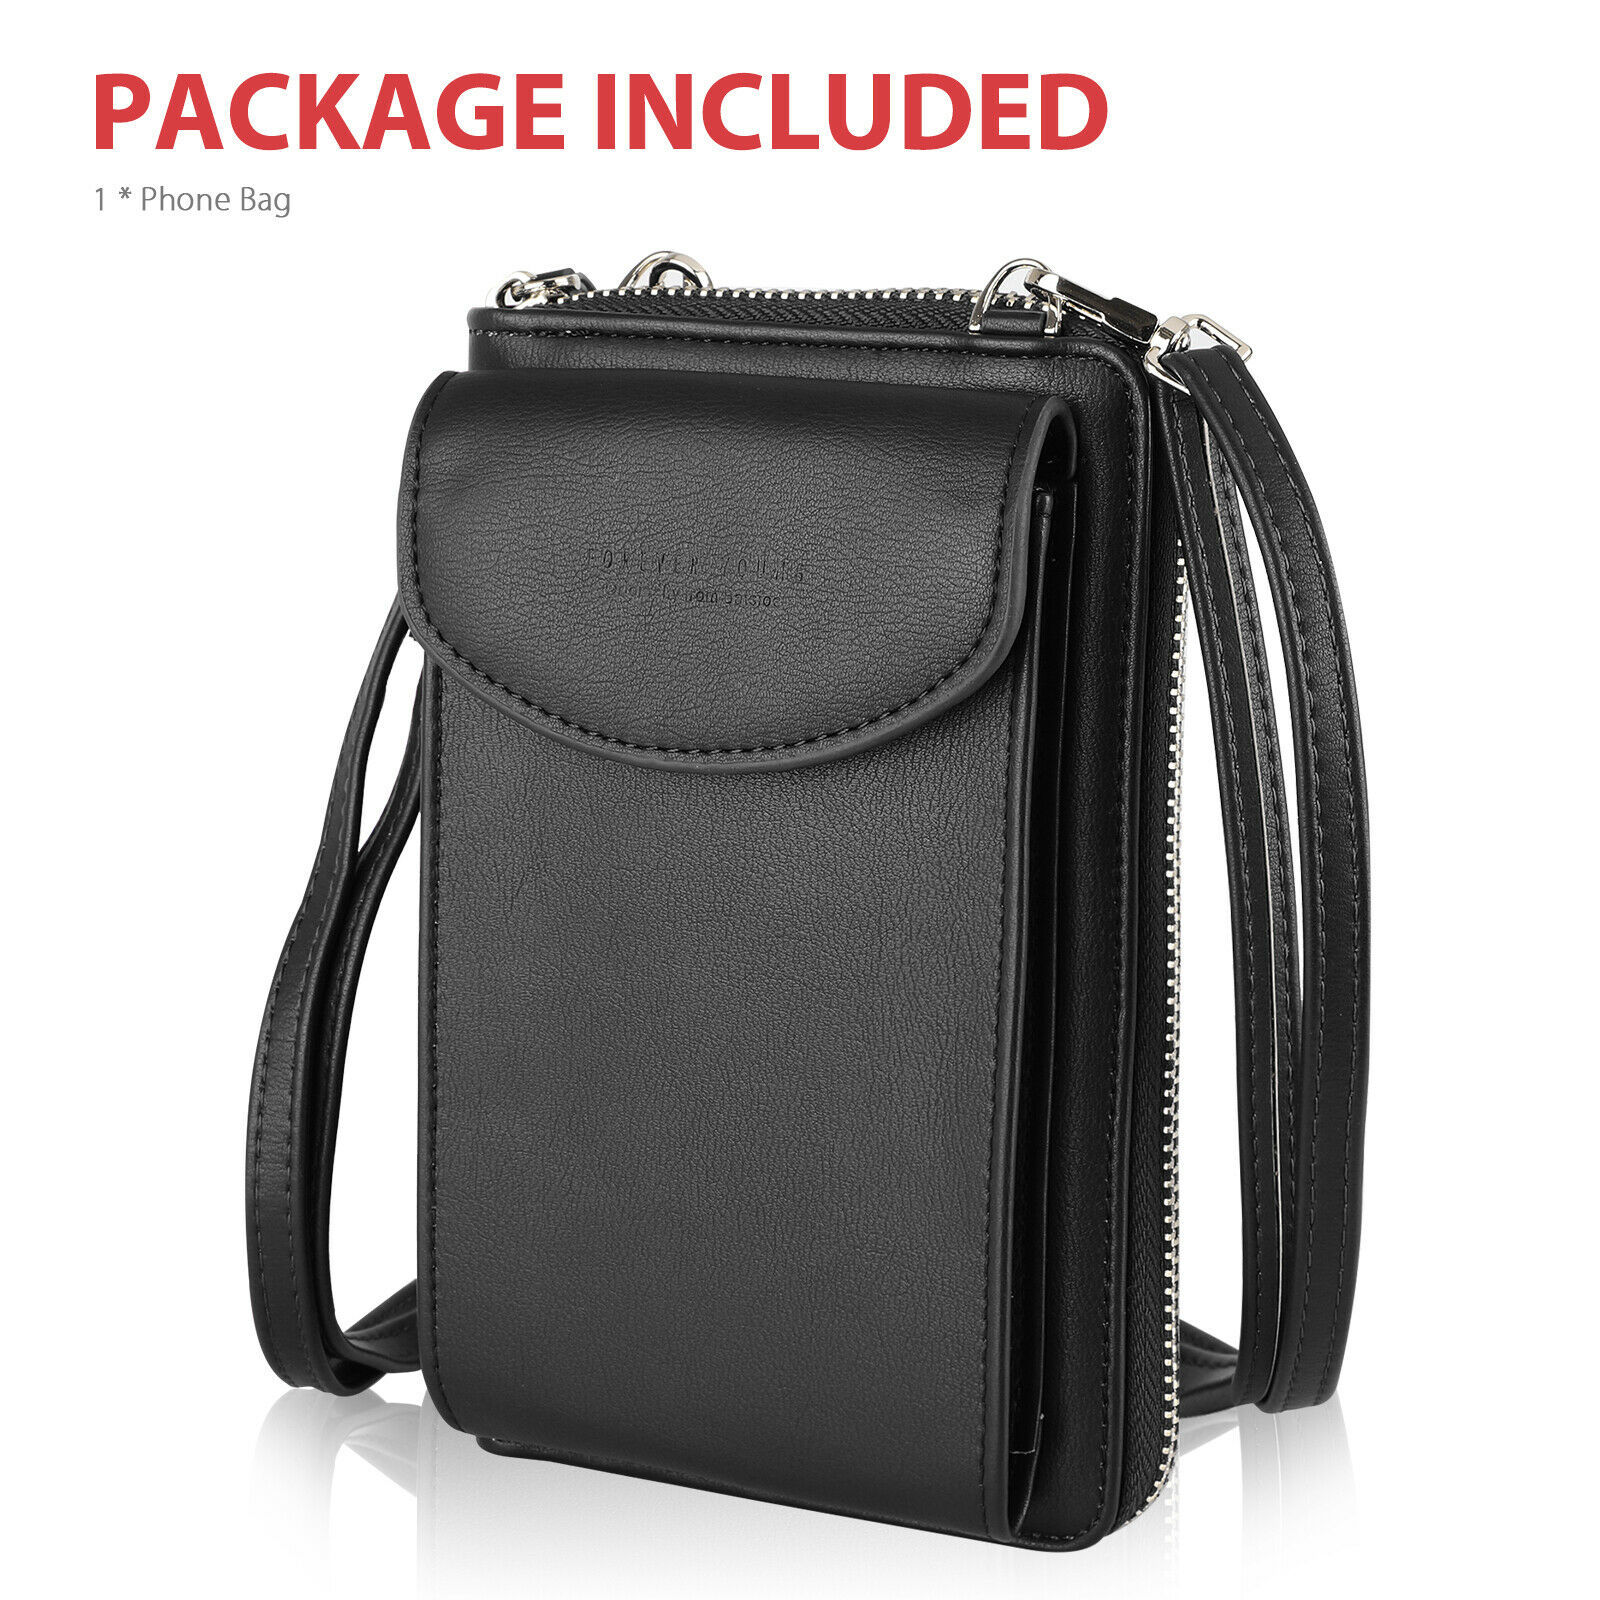 Small Cross-body Cell Phone Handbag Case Shoulder Bag Pouch Purse Wallet Women - Handbag Accessories